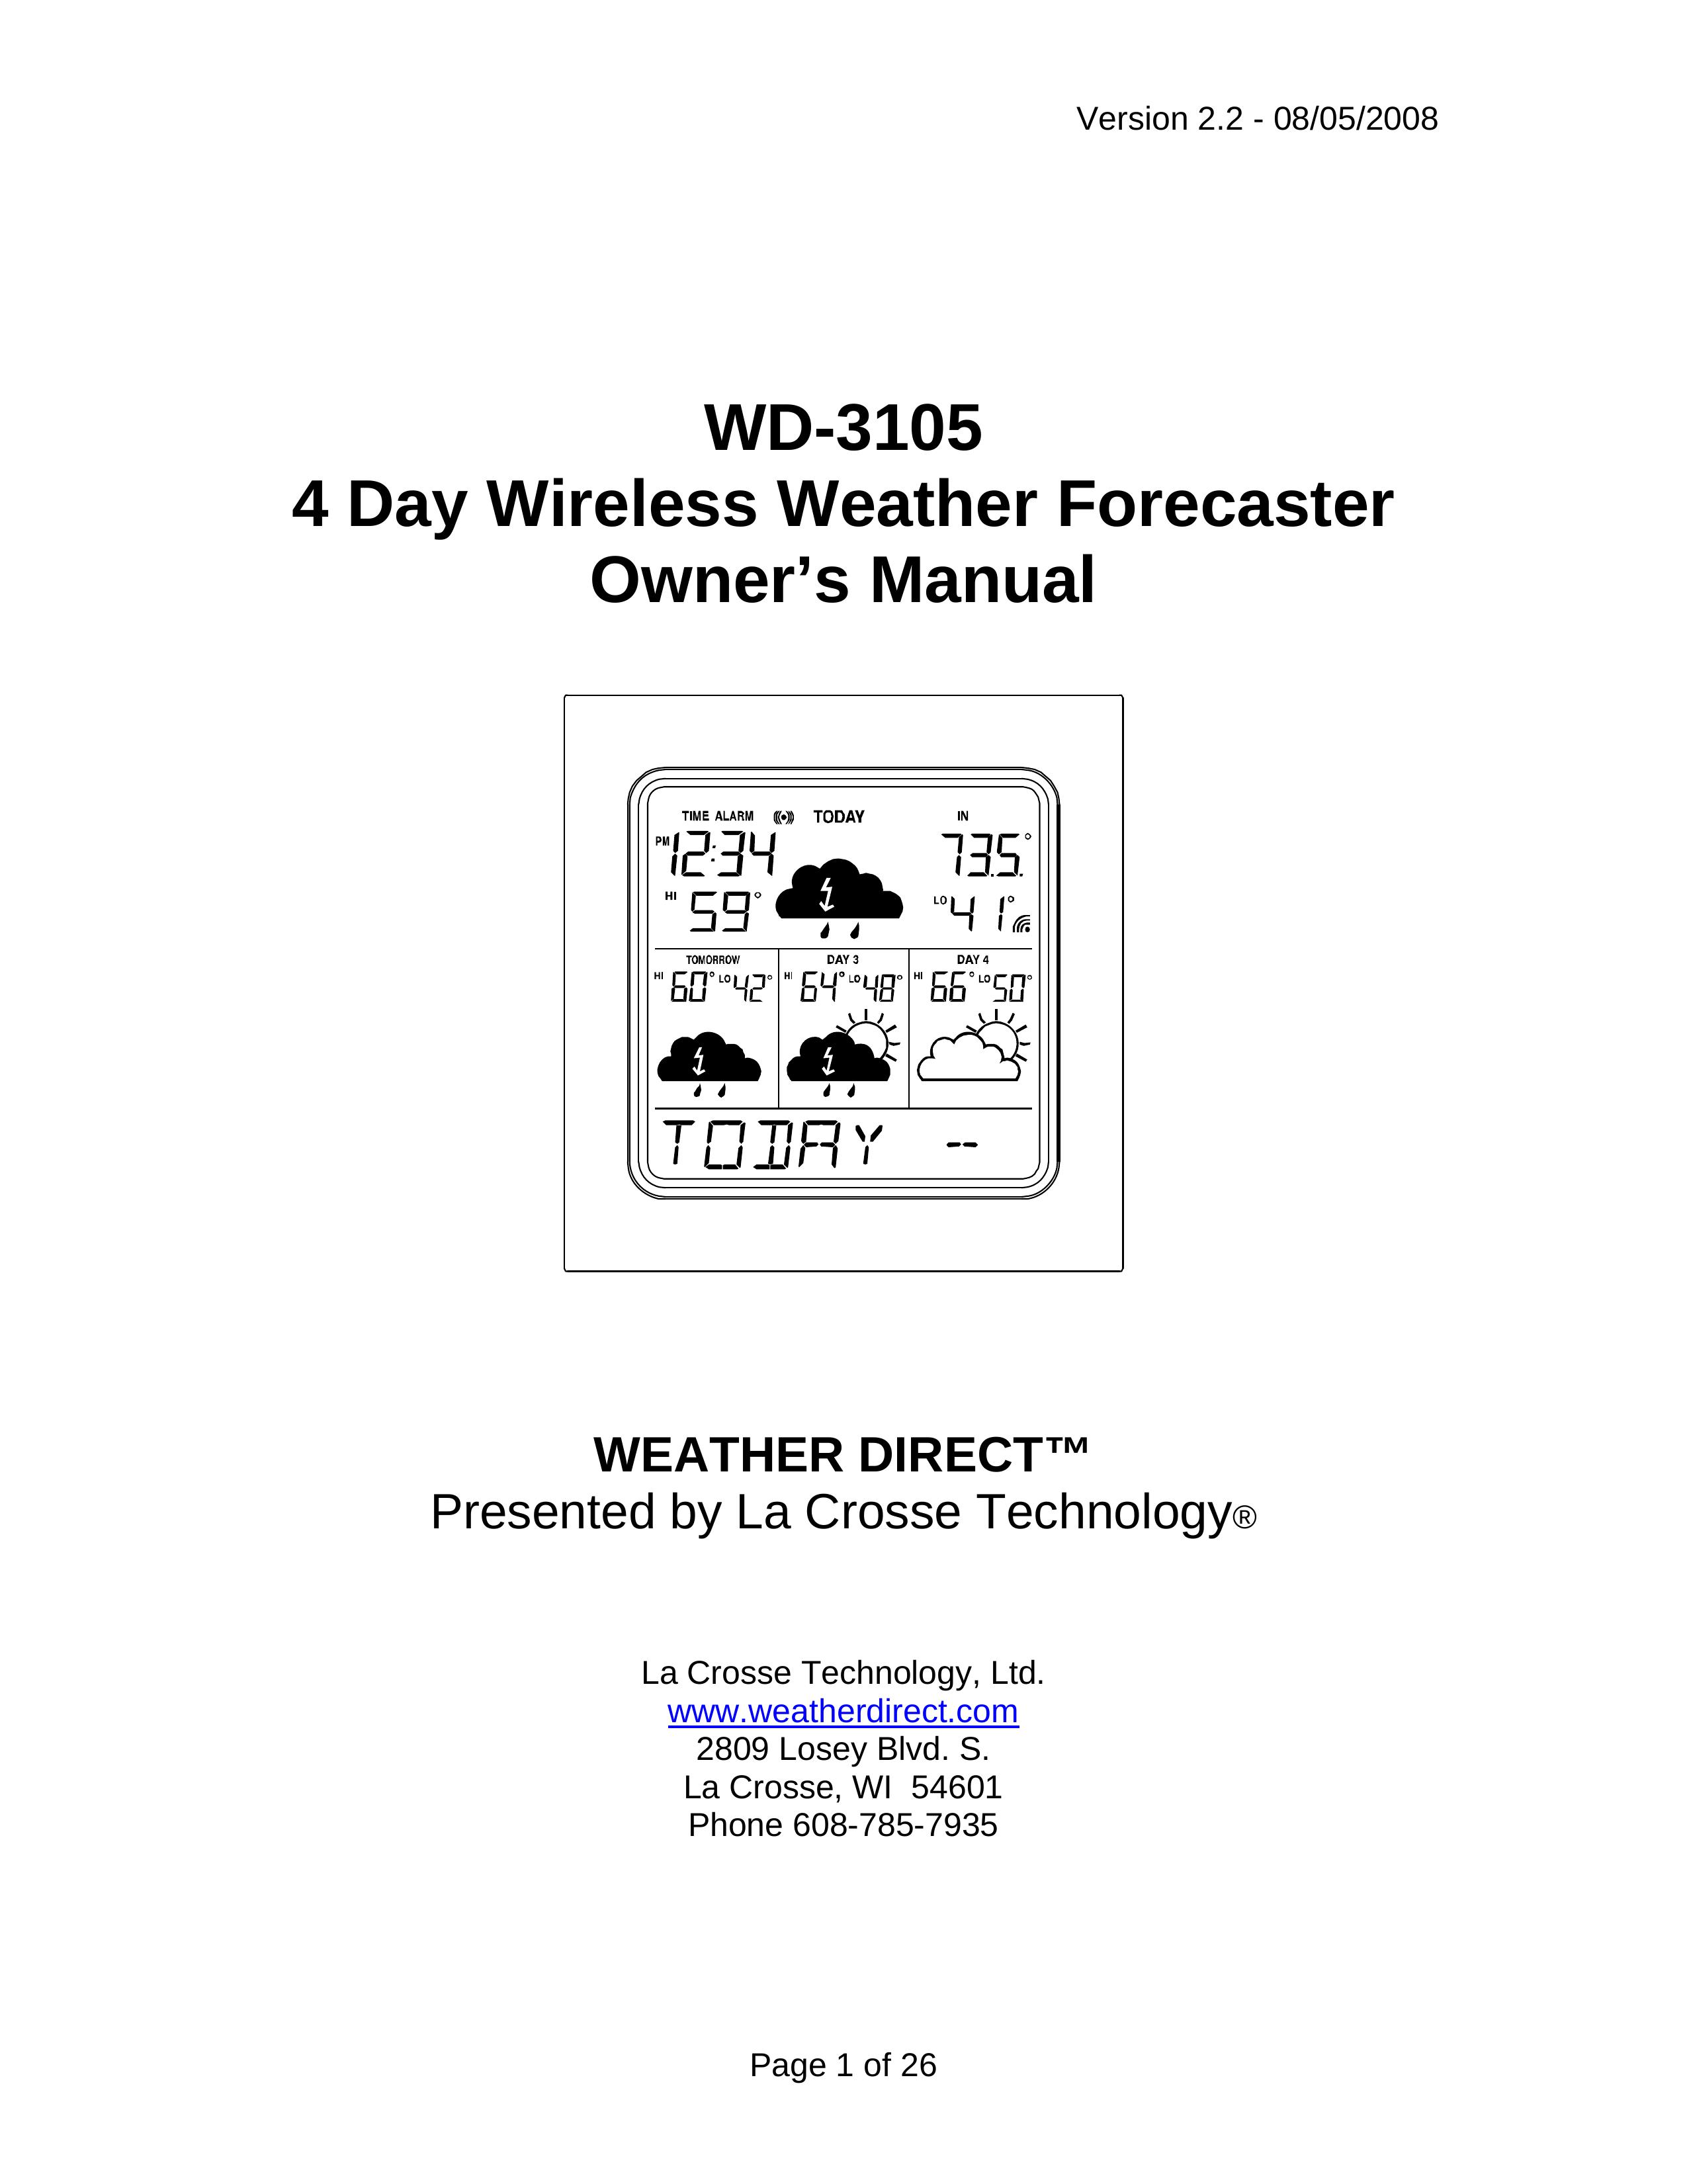 La Crosse Technology WD-3105 Weather Radio User Manual